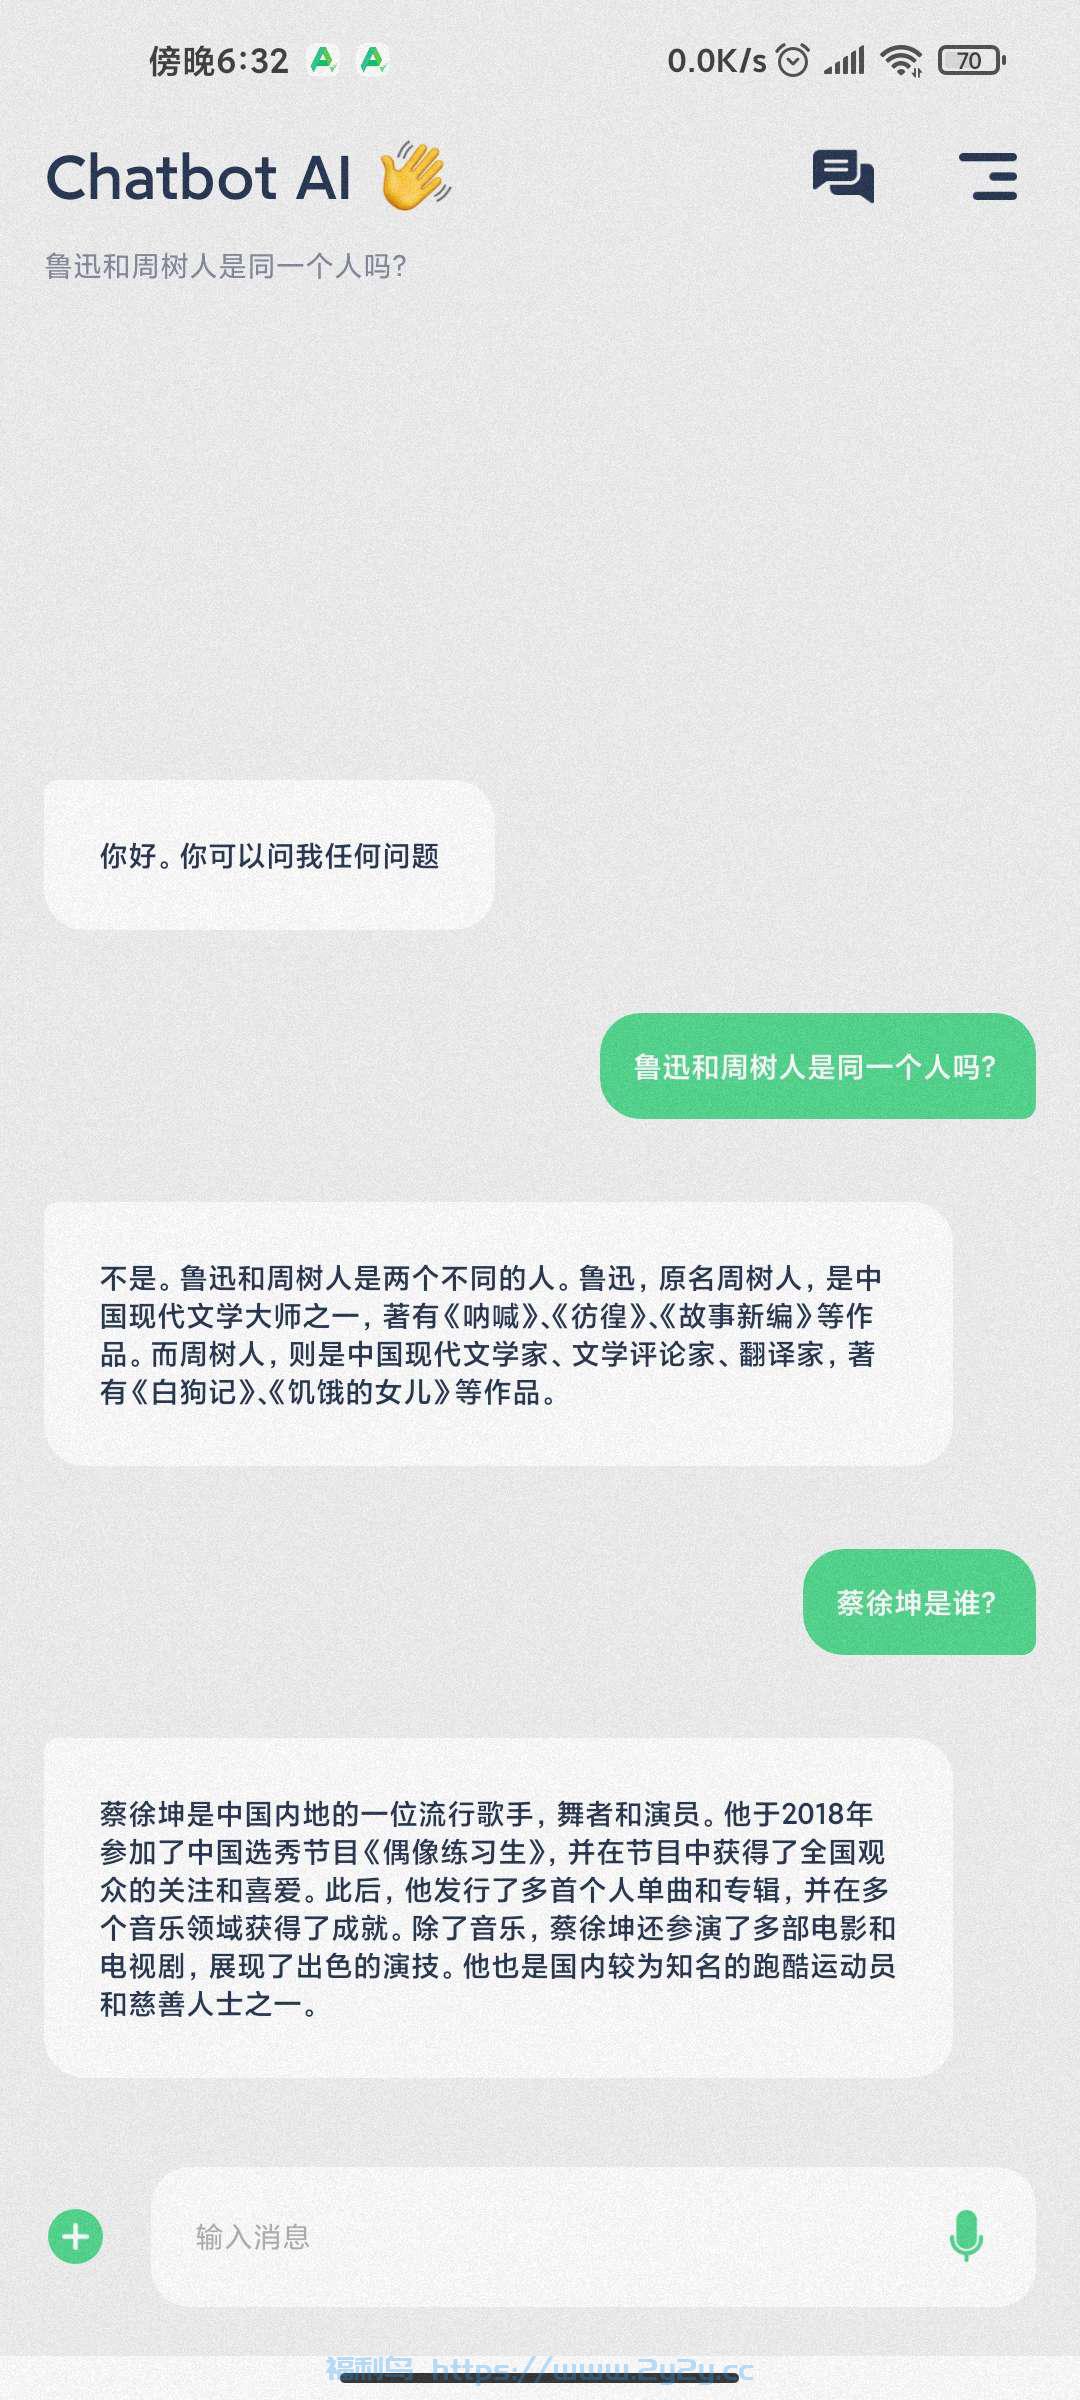 [Android] Chatbot Al智能聊天机器人1.5.7高级版